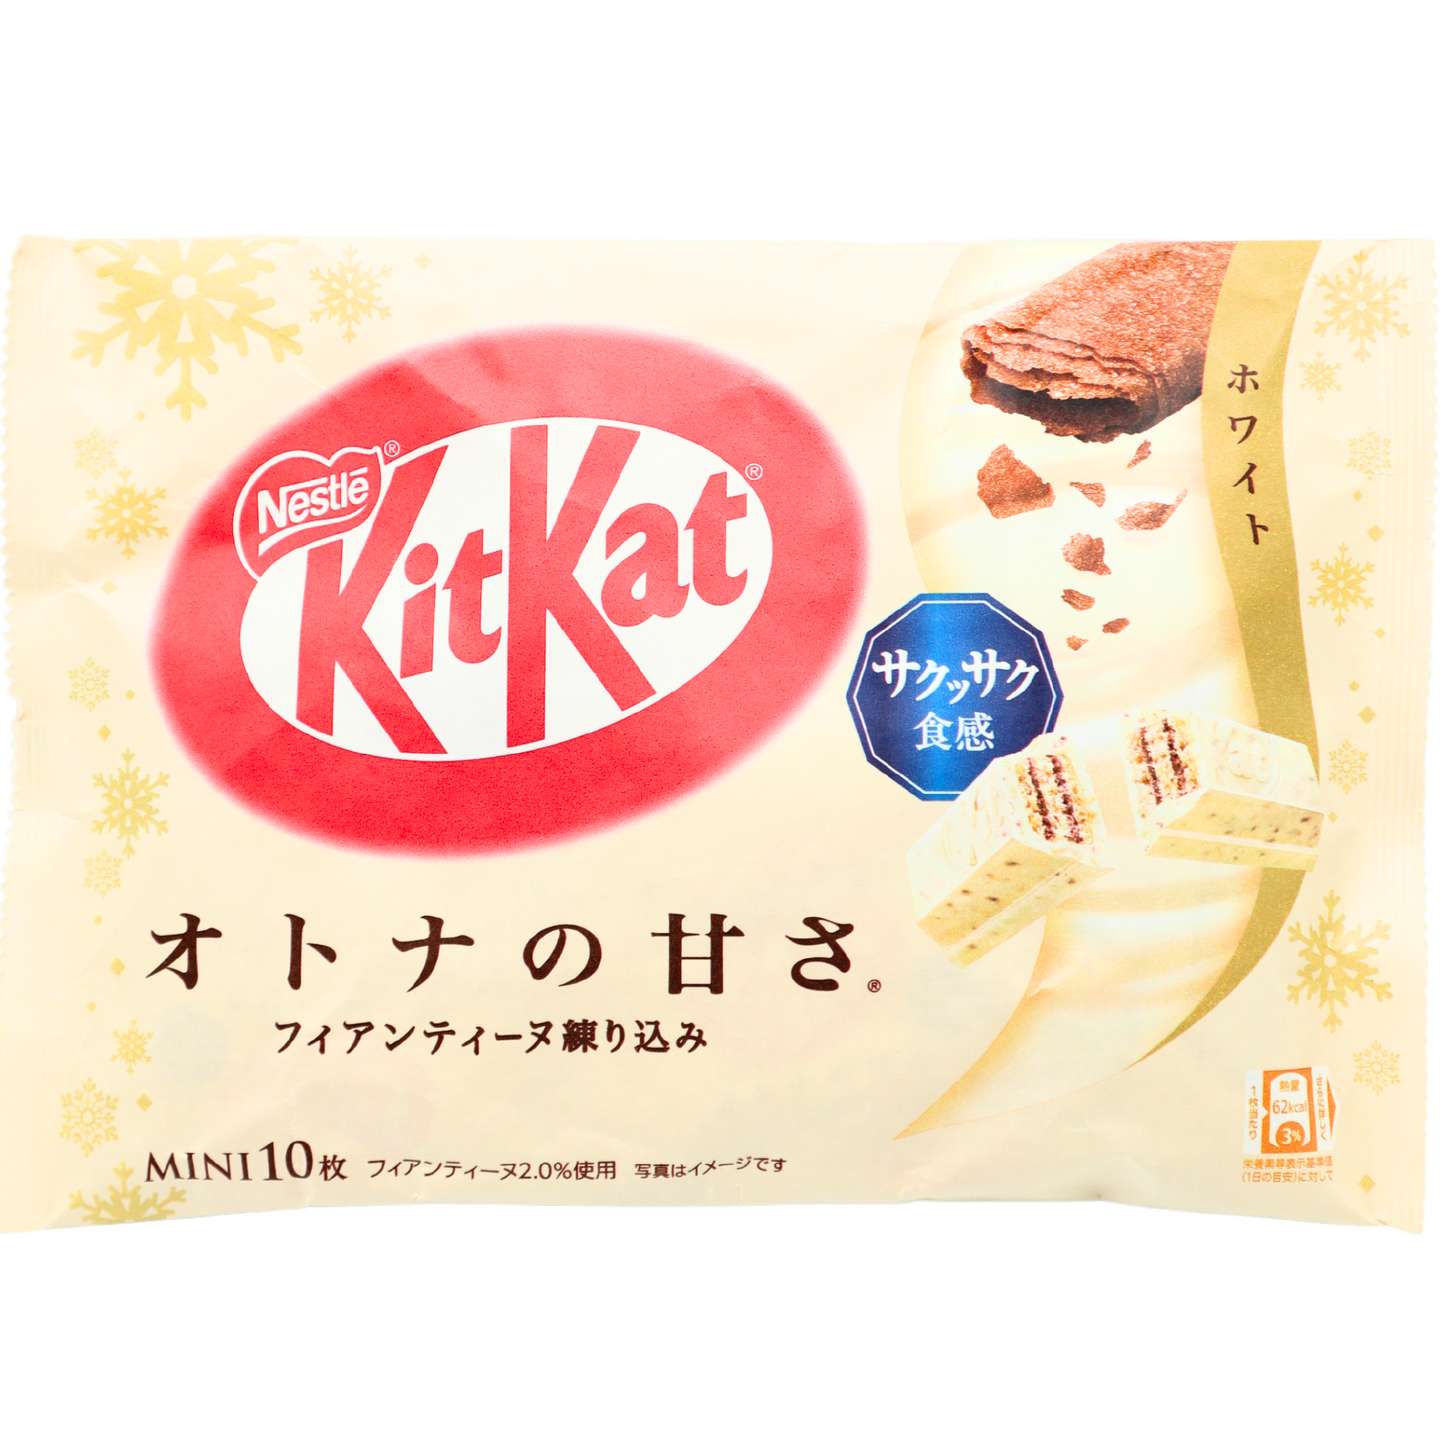 Nestlé KitKat Mini - Weiße Schokoladenkuchen (Limitiert) 127g